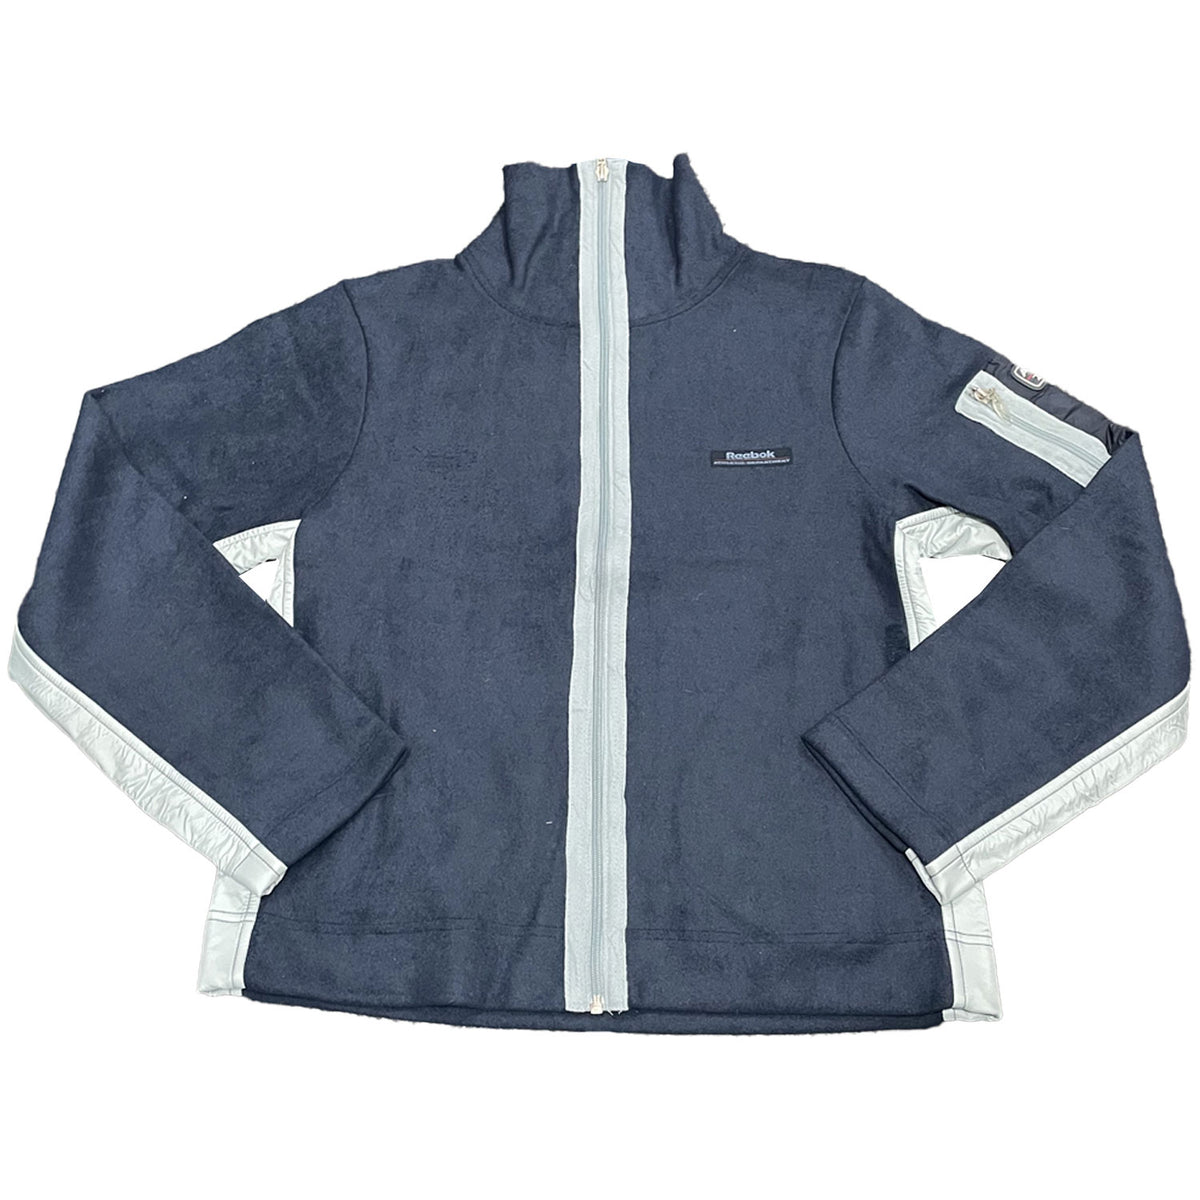 Reebok Womens Athletic High Collar Fleece Jacket - Navy - UK Size 12